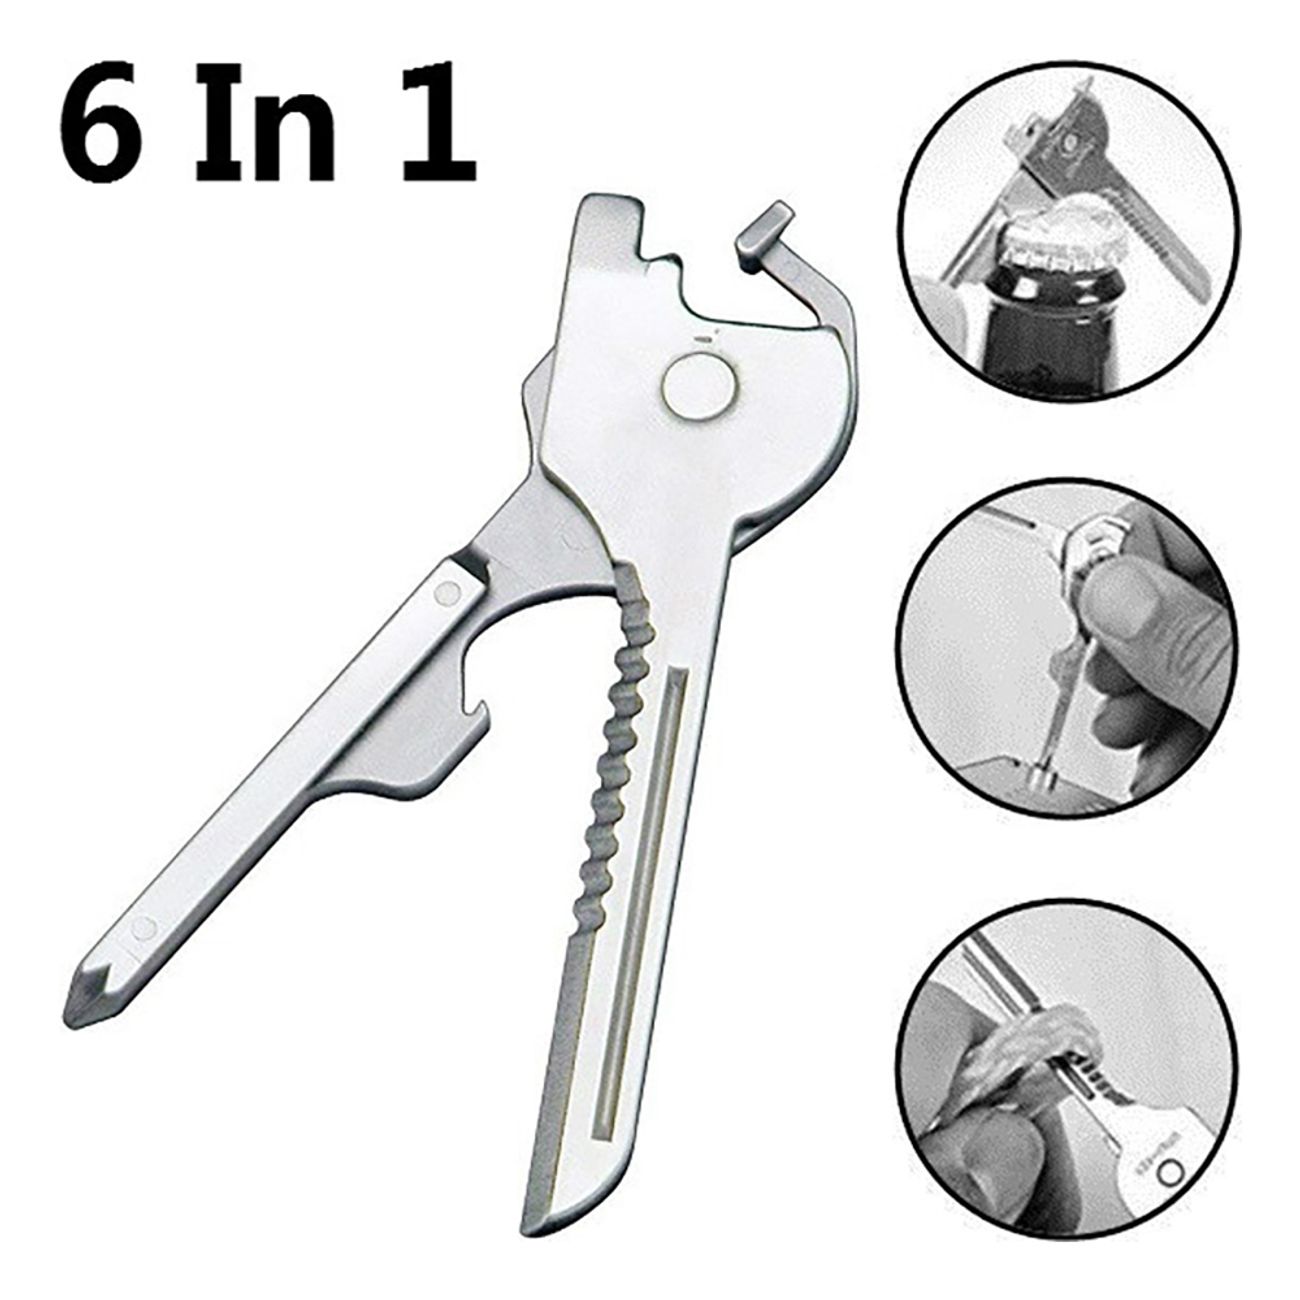 6in1-utili-key-nyckelring-9